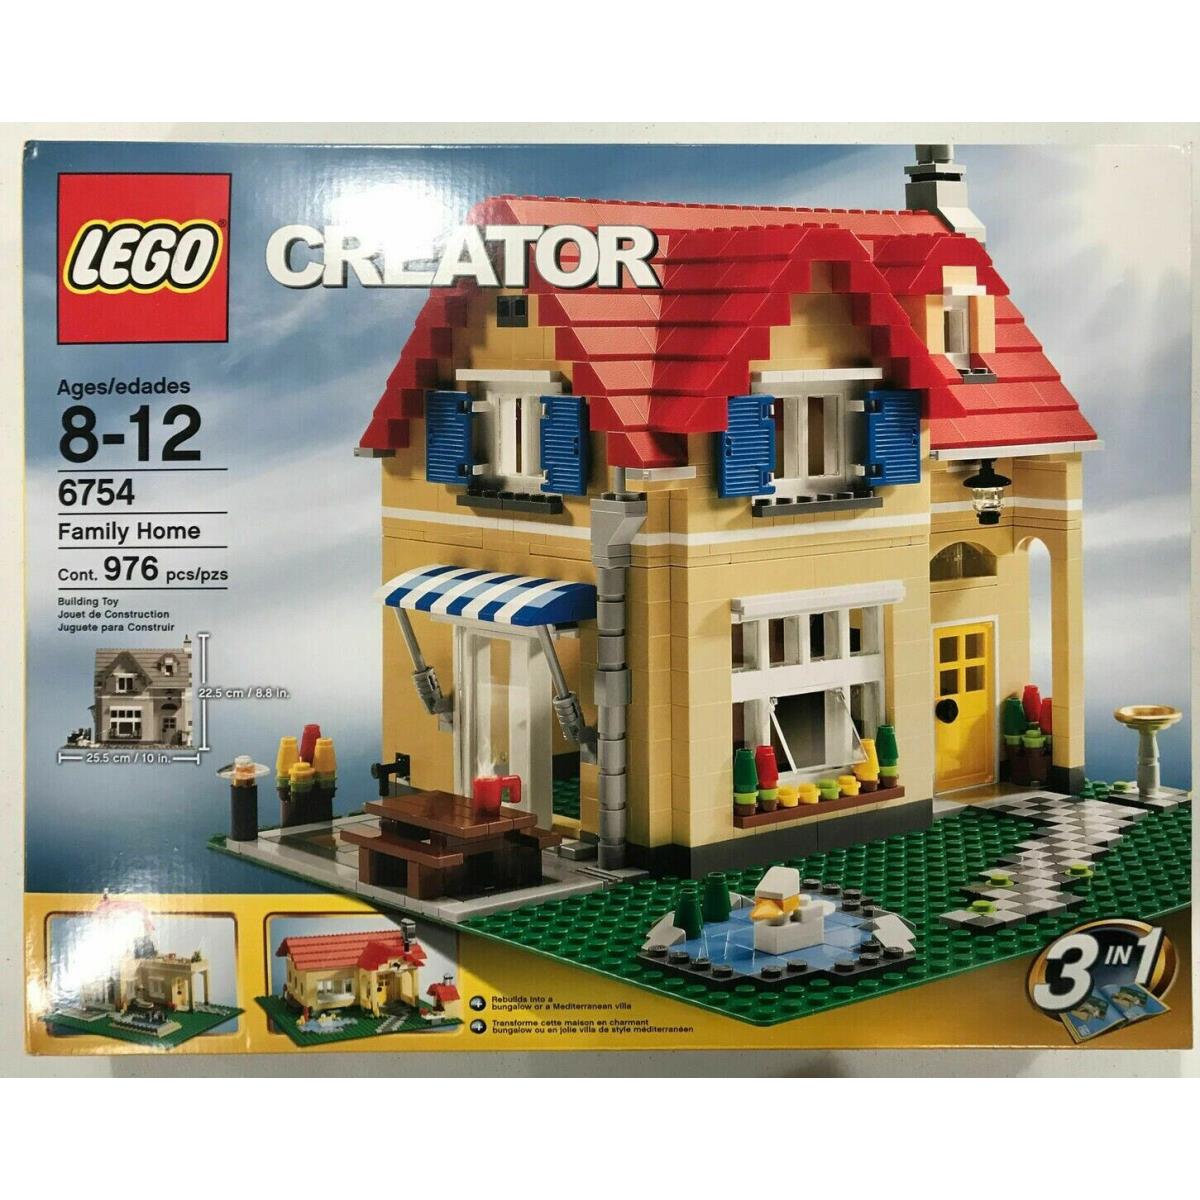 Lego 6754 Set Family Home 3 in 1 Creator 976 Pcs